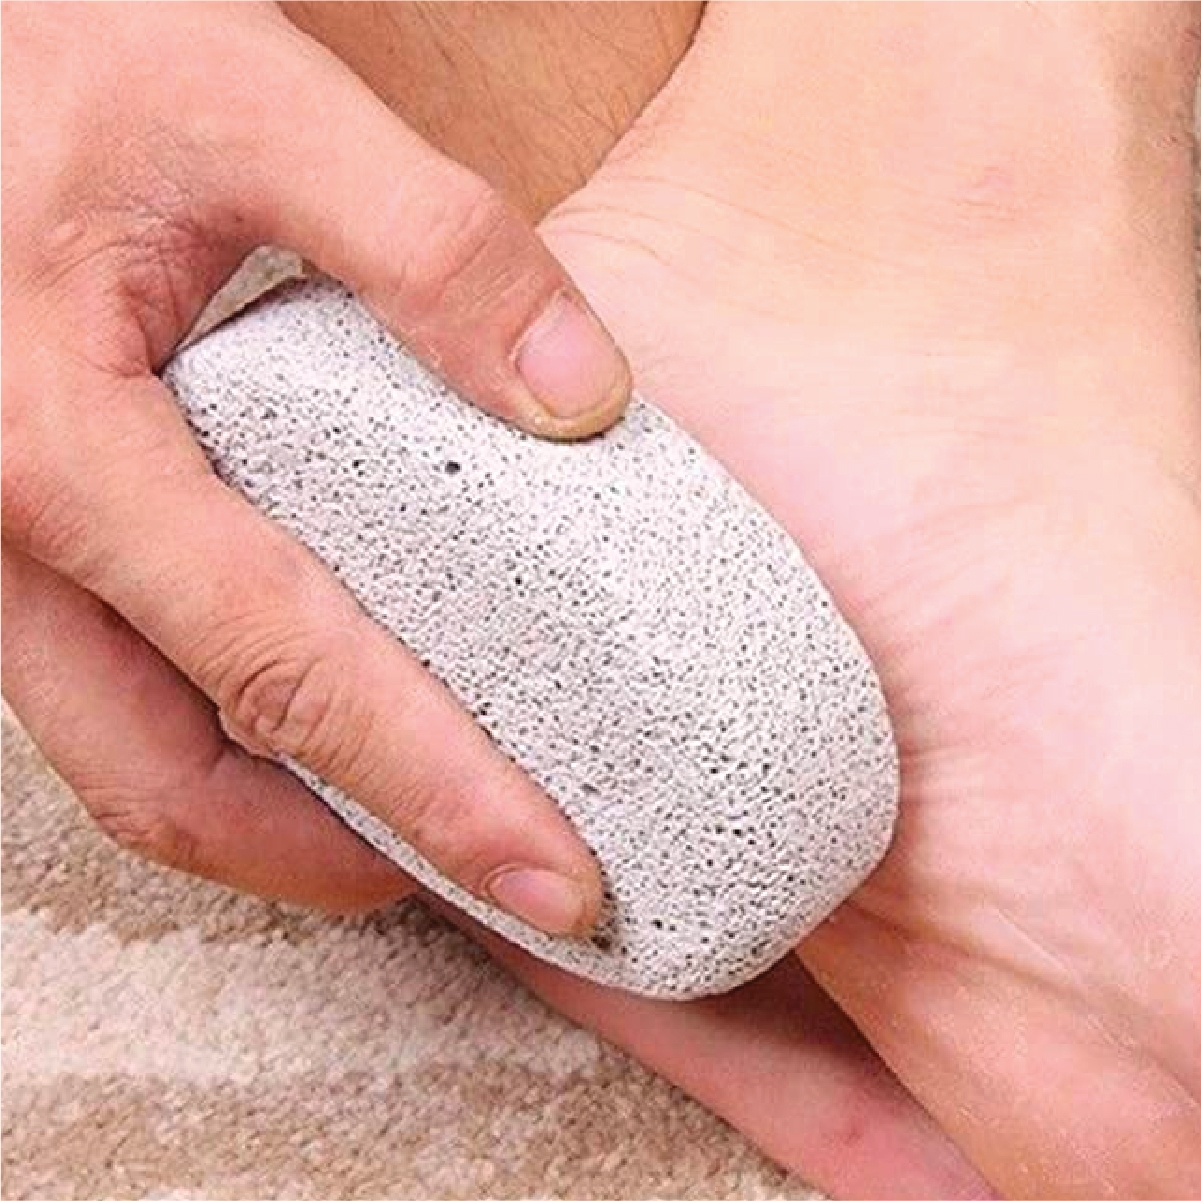 https://cdn.fynd.com/v2/falling-surf-7c8bb8/fyprod/wrkr/products/pictures/item/free/original/LqMrLQJpi-Clensta-Foot-Scrubber-for-Dead-Skin-or-Pumice-stone-for-foot-scrub-or-Pedicure-Tools-for-Feet-or-Foot-Filer-For-Women-or-Foot-Scrub-or-Heel-Scrubber-For-Dead-Skin-or-Pumice-stone-for-body-scrub.jpeg